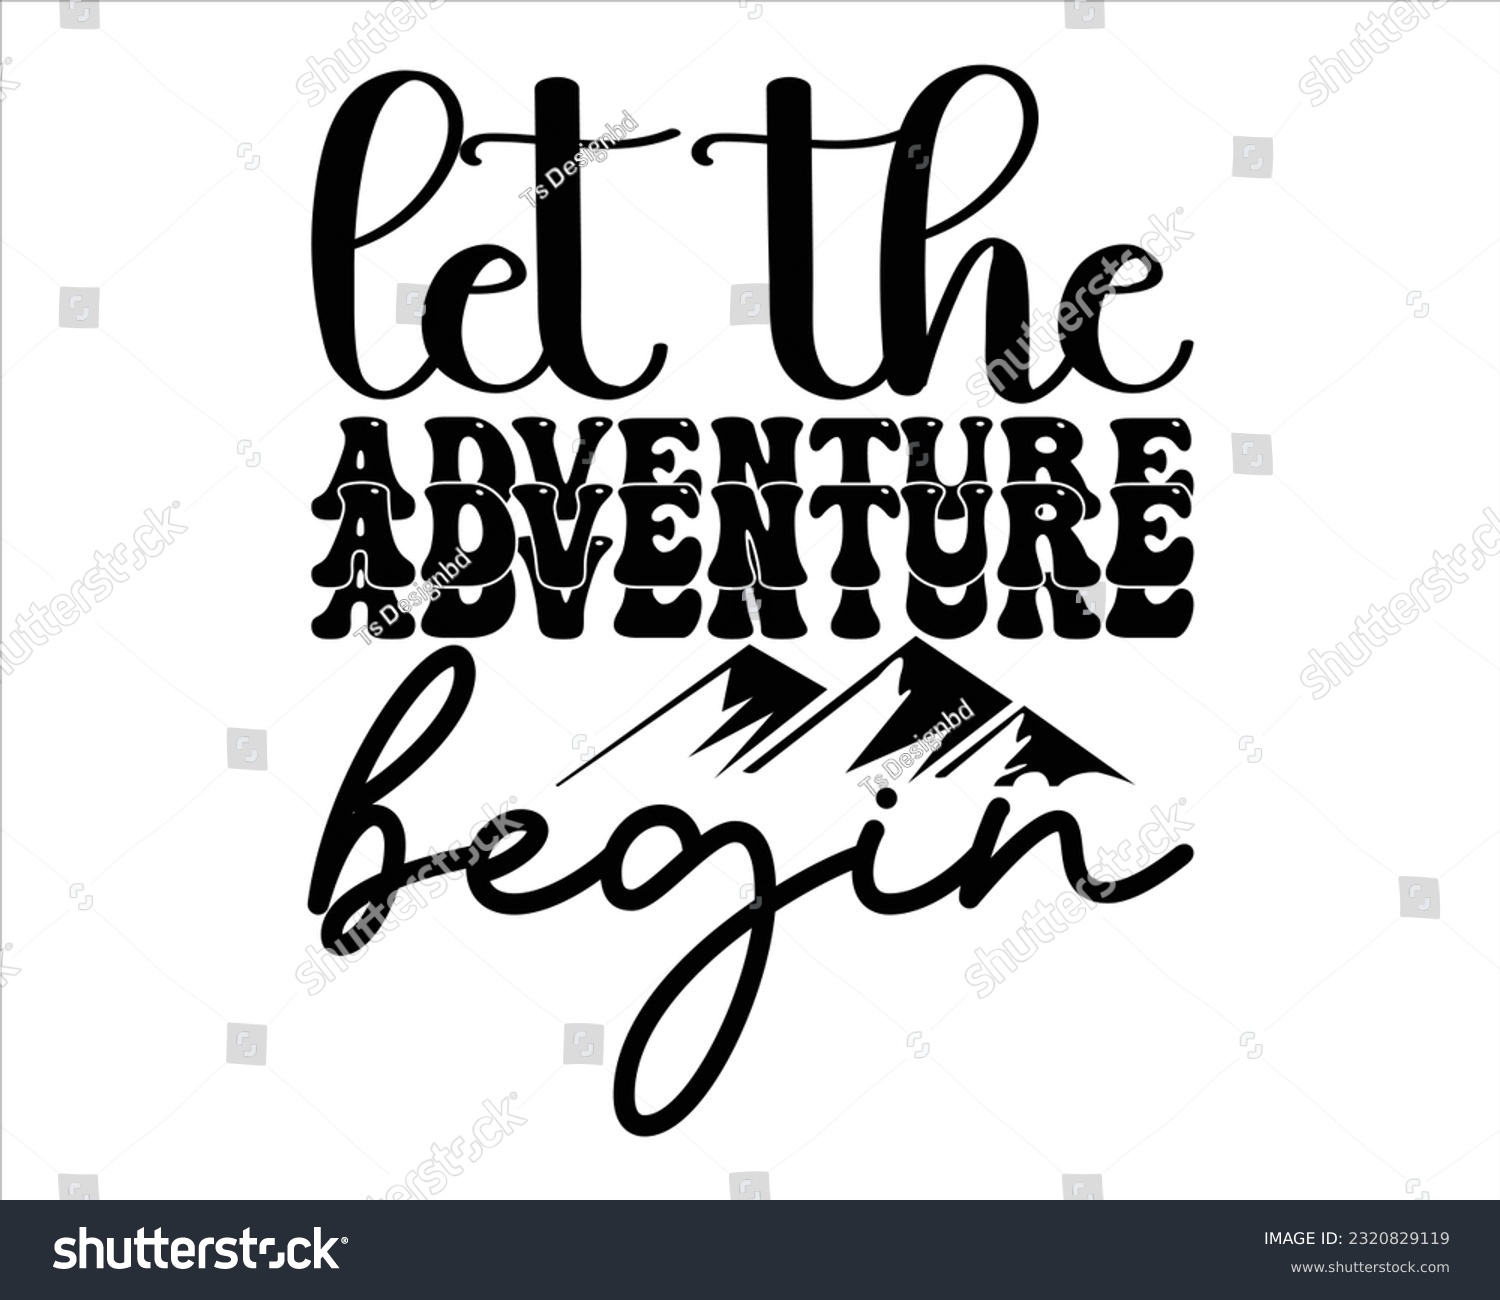 SVG of Let The Adventure Begin Retro Svg Design,Hiking Retro Svg Design, Mountain illustration, outdoor adventure ,Outdoor Adventure Inspiring Motivation Quote, camping,groovy design svg